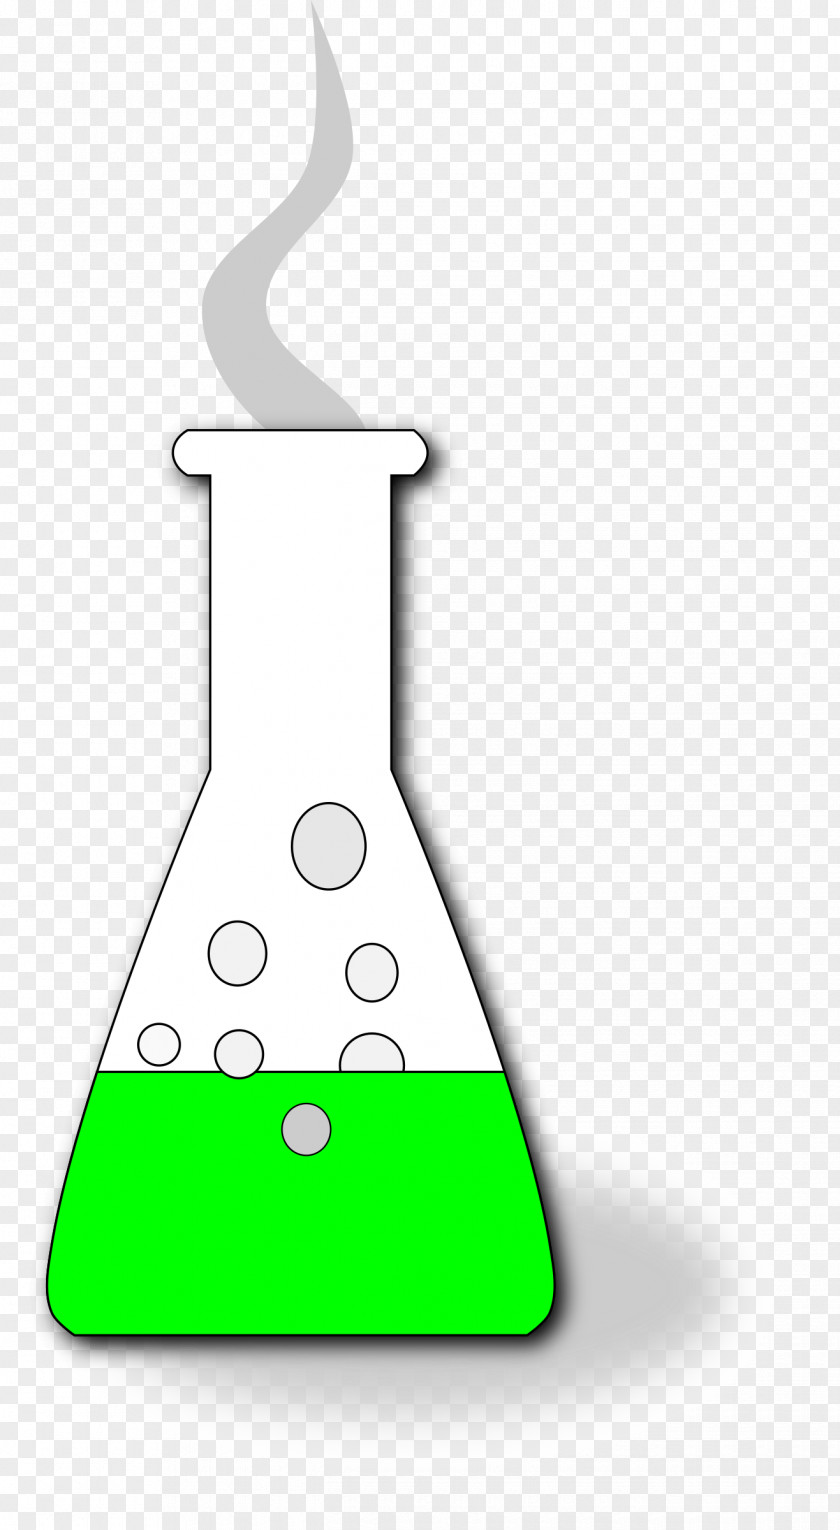 Potions Clipart Laboratory Flasks Erlenmeyer Flask Beaker Glassware Clip Art PNG